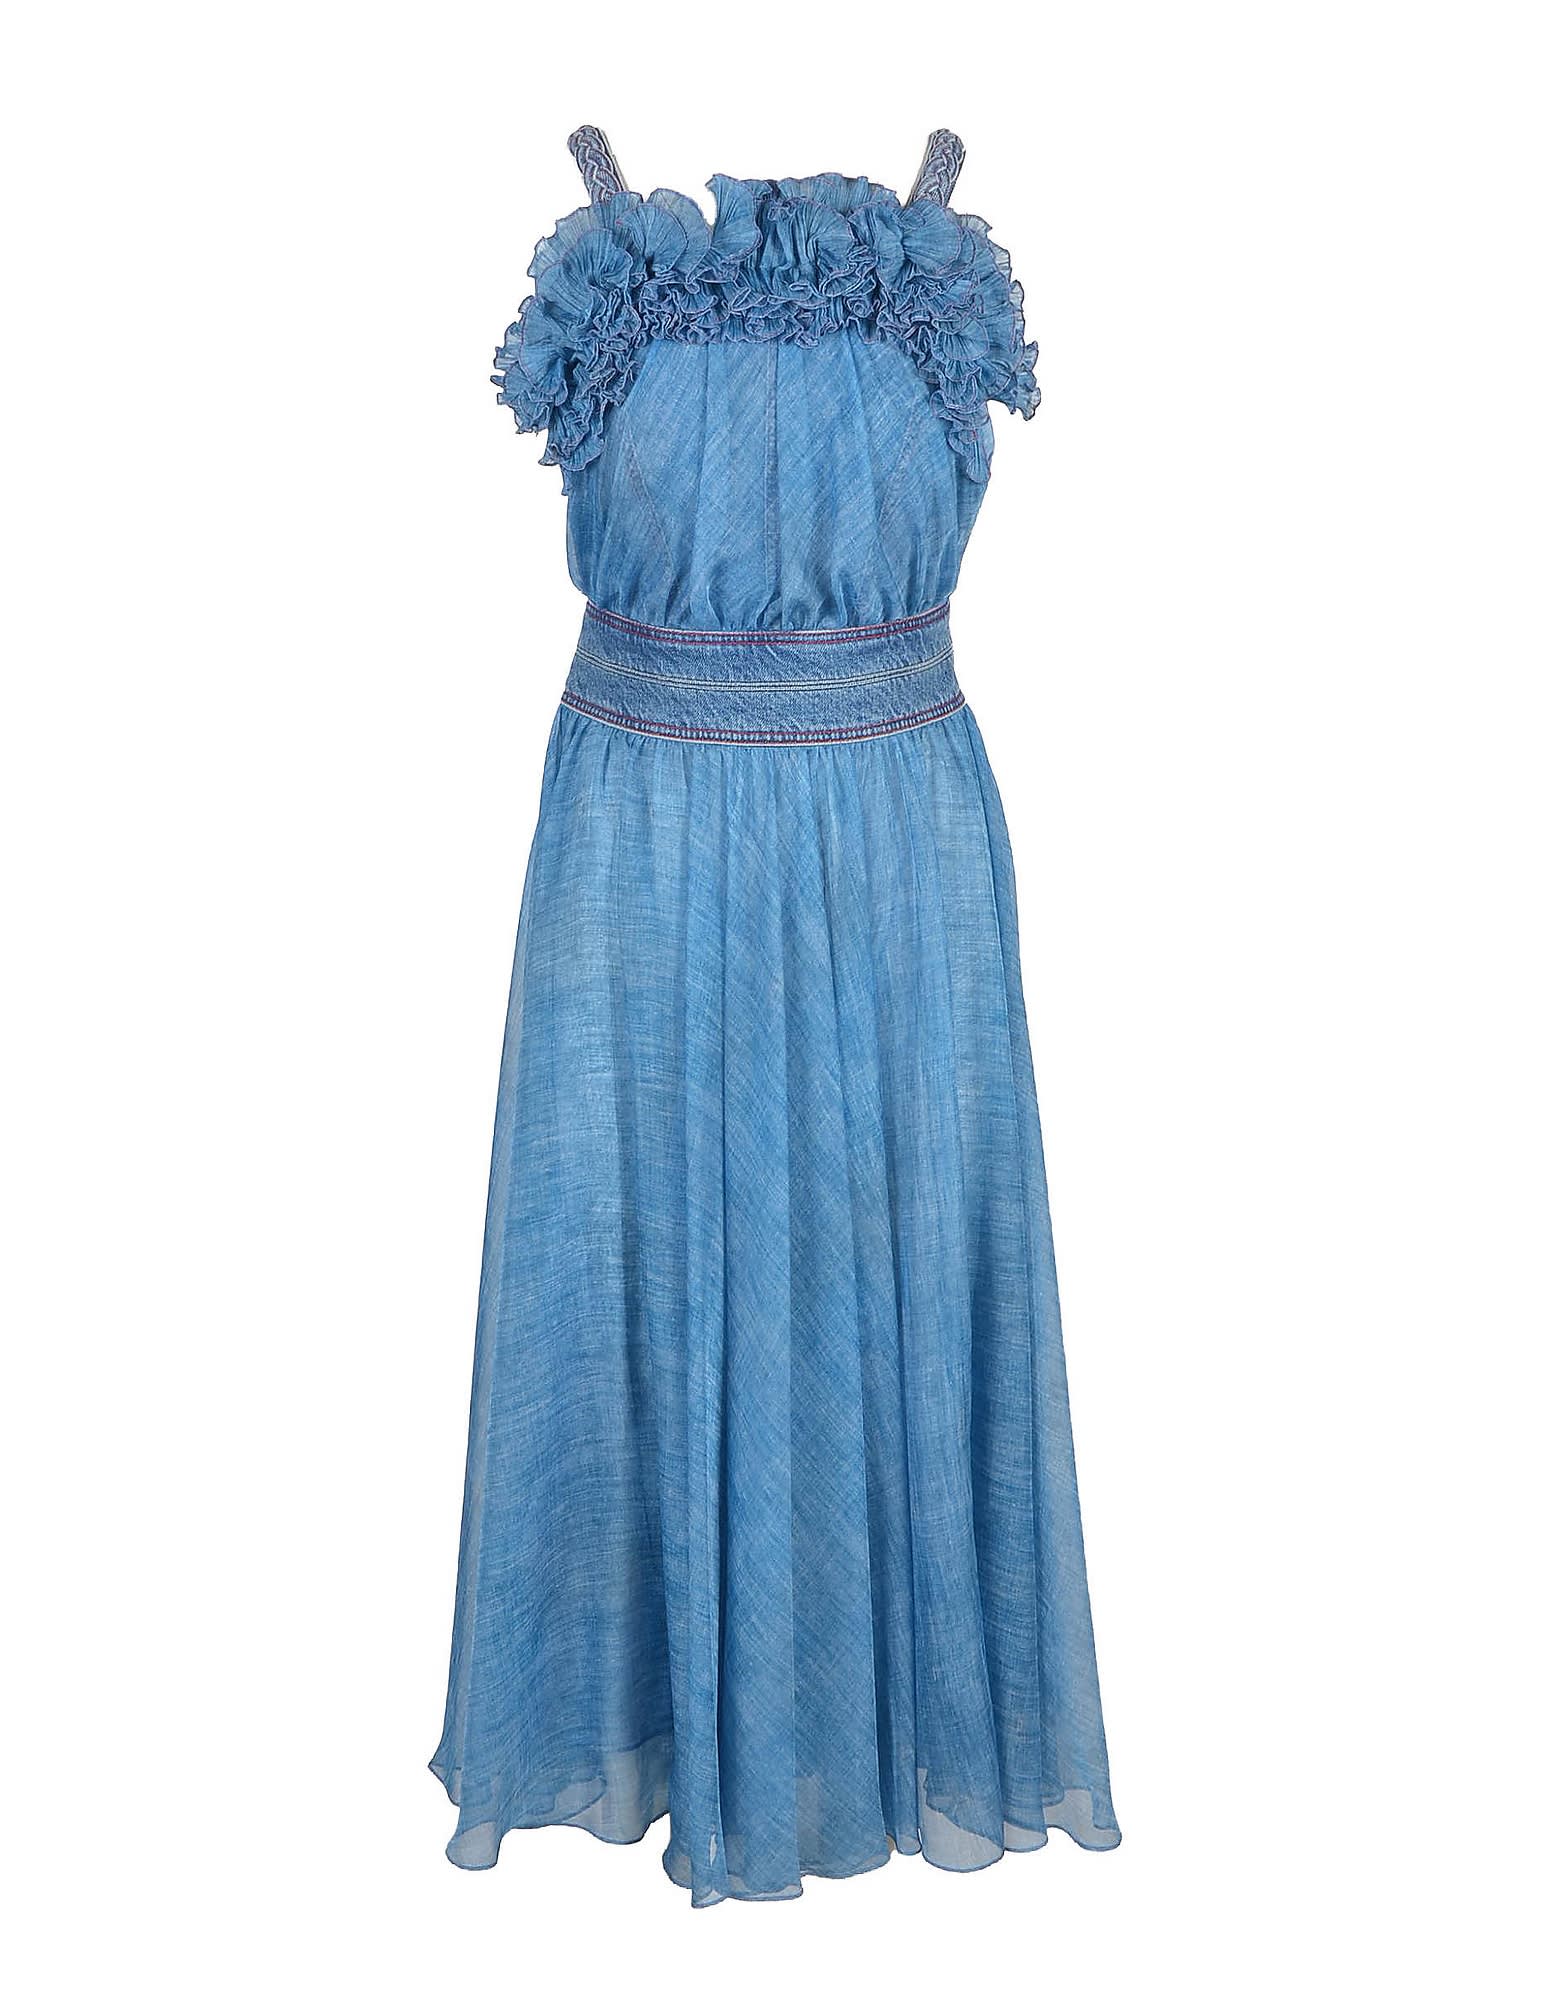 Philosophy di Lorenzo Serafini Womens Light Blue Dress